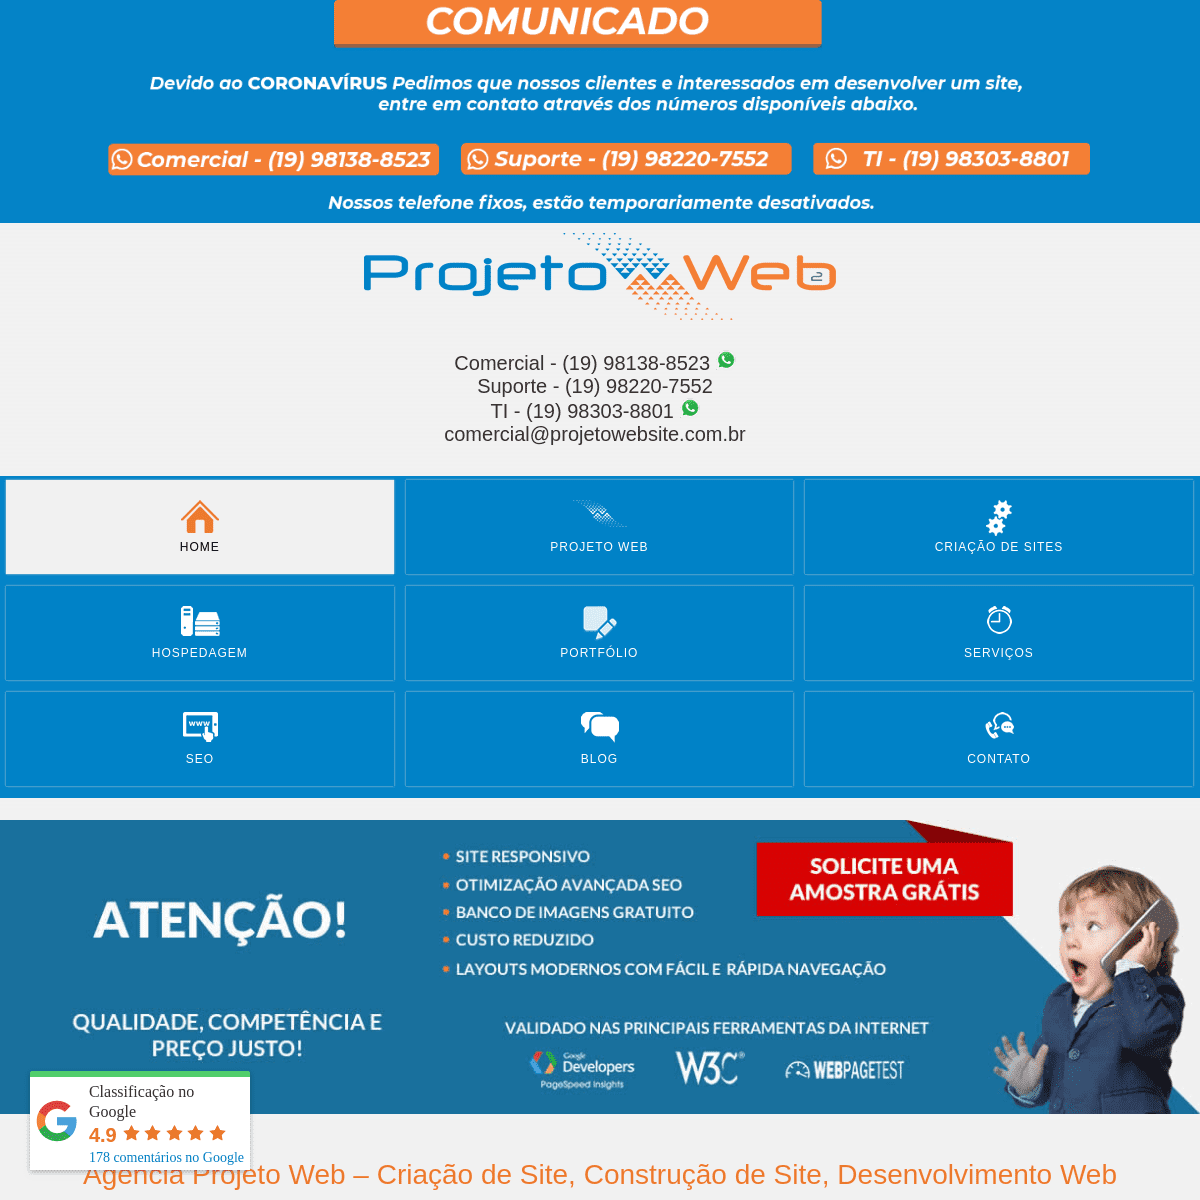 A complete backup of projetowebsite.com.br